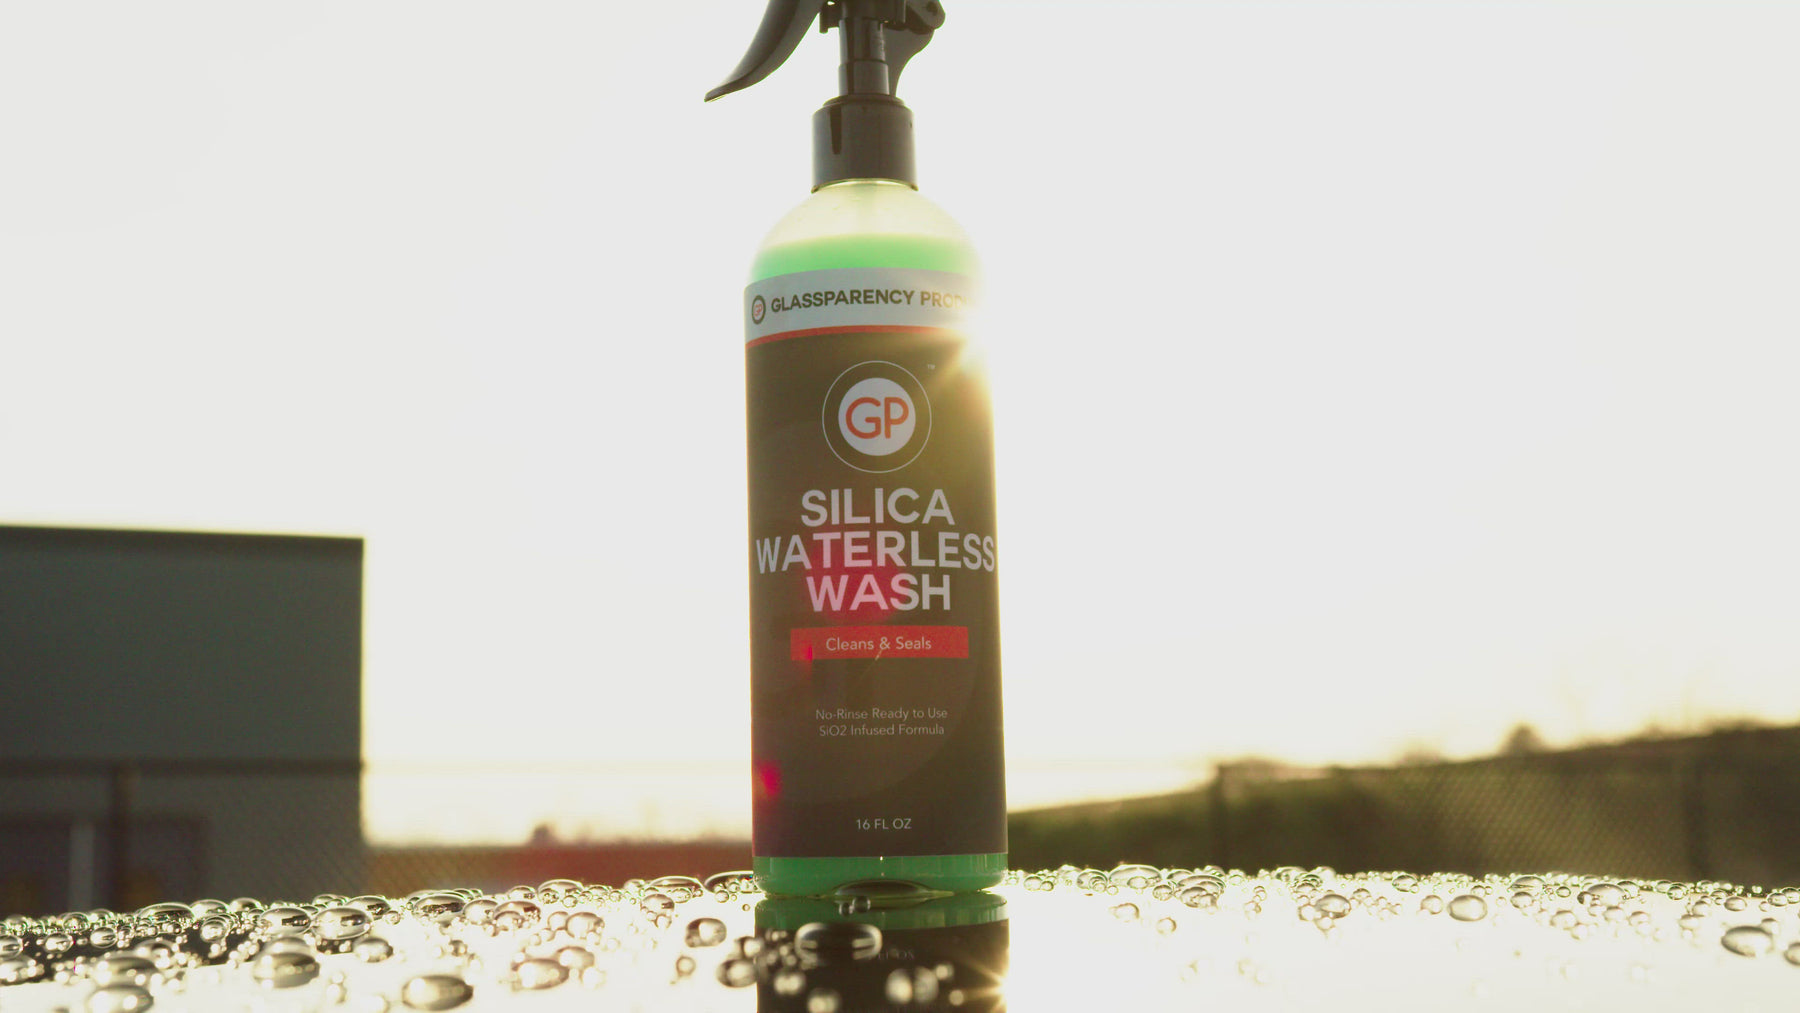 Silica Waterless Wash – GlassParency